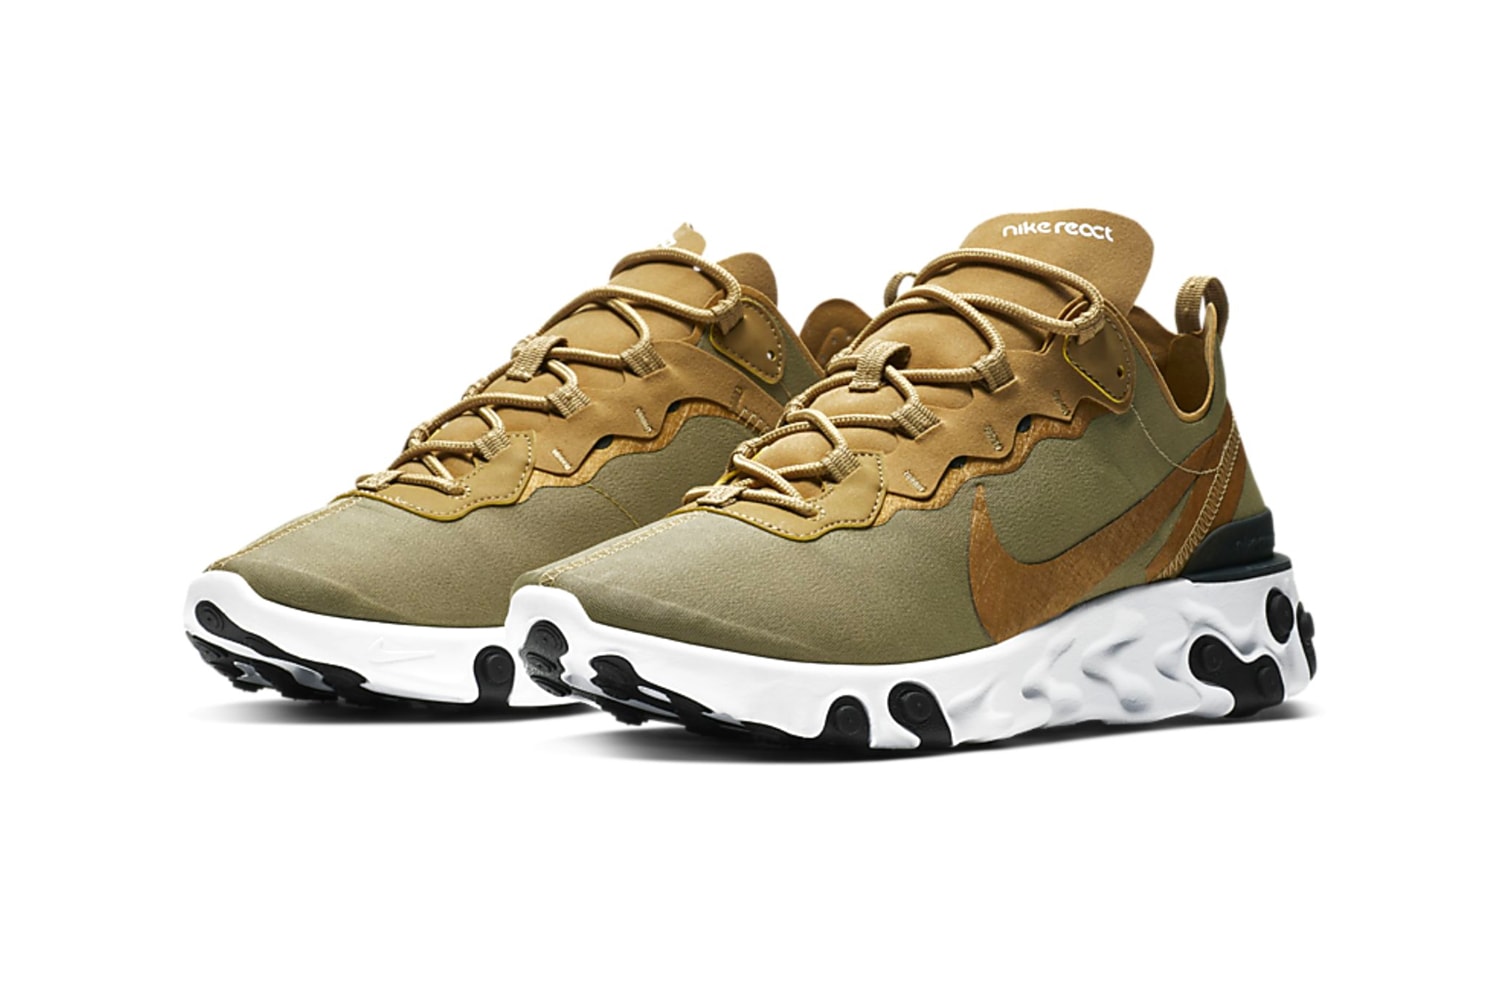 Nike React Element 55 "Metallic Gold" "Metallic Silver" Release Info price date sneaker colorway tan olive brown purchase buy online